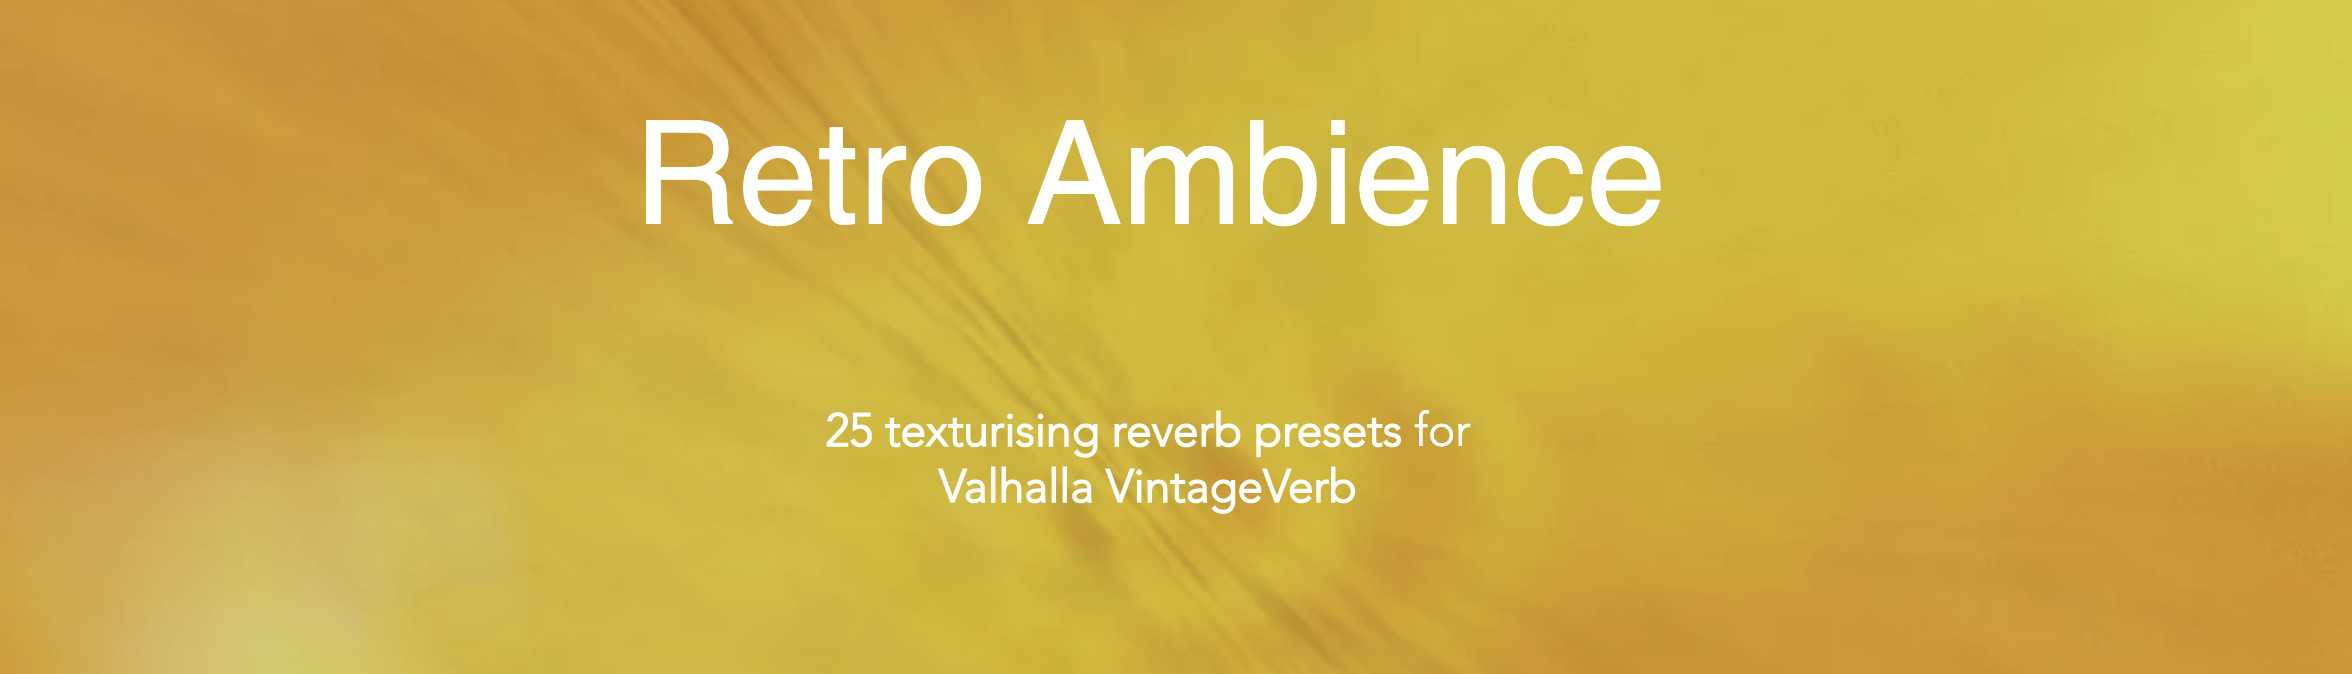 Retro Ambience for Valhalla VintageVerb Sale